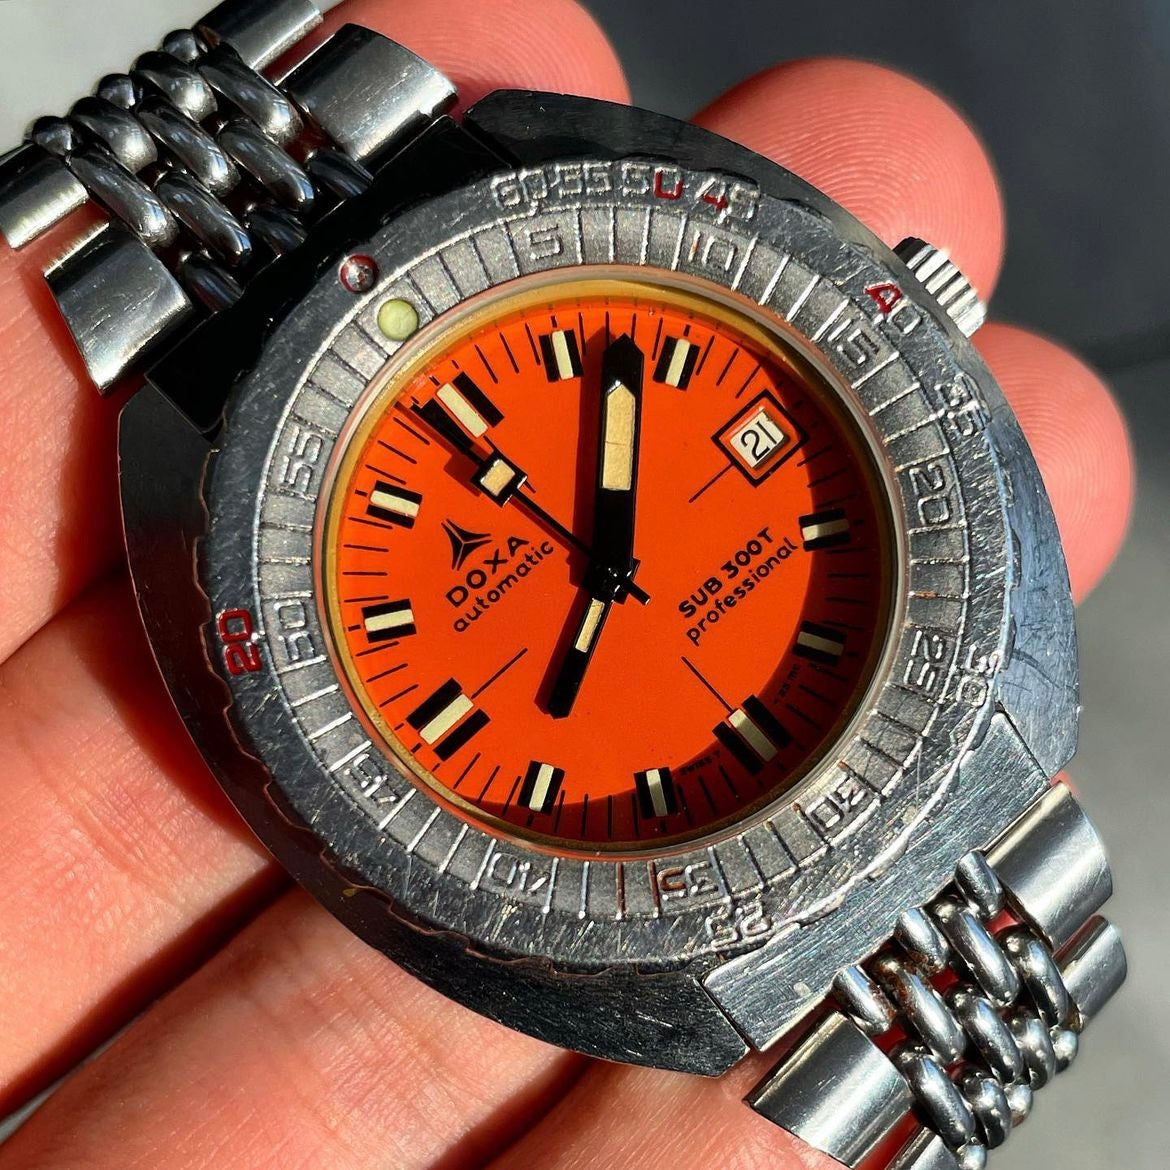 Doxa "Orange" Sub 300T Professional on Original BoR Bracelet